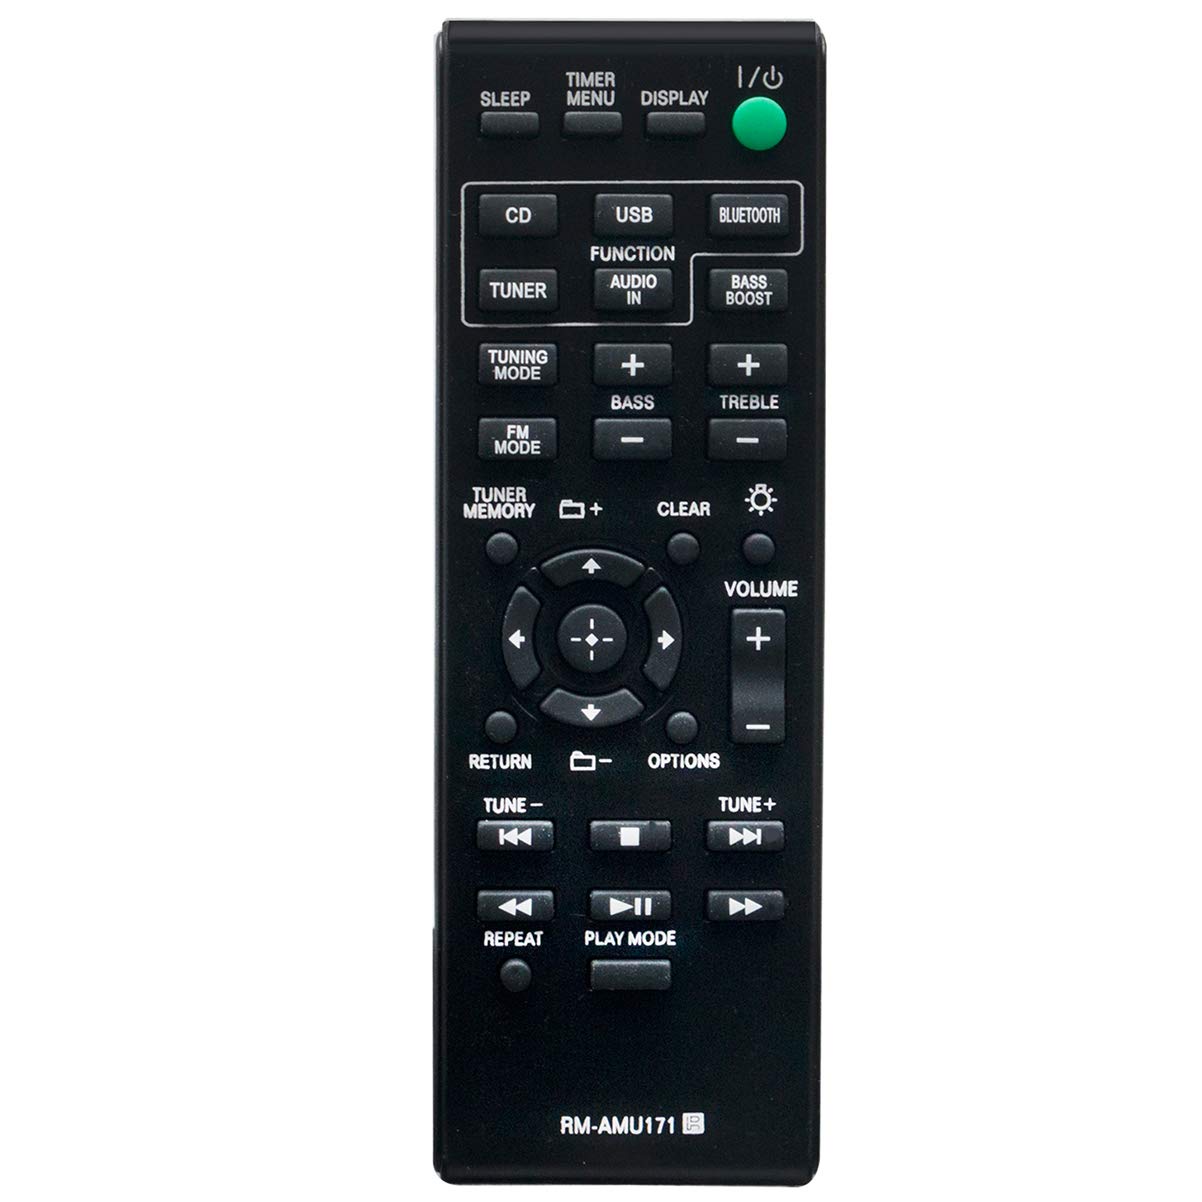 Mua RM-AMU171 Replace Remote Control Applicable for Sony Hi-Fi System CMT-BT60  CMT-SBT100 CMT-SBT100B HCD-SBT100 CMT-BT80W CMT-BT80WB CMTBT60 CMTSBT100  CMTSBT100B HCDSBT100 CMTBT80W CMTBT80WB trên Amazon Mỹ chính hãng 2023  Giaonhan247